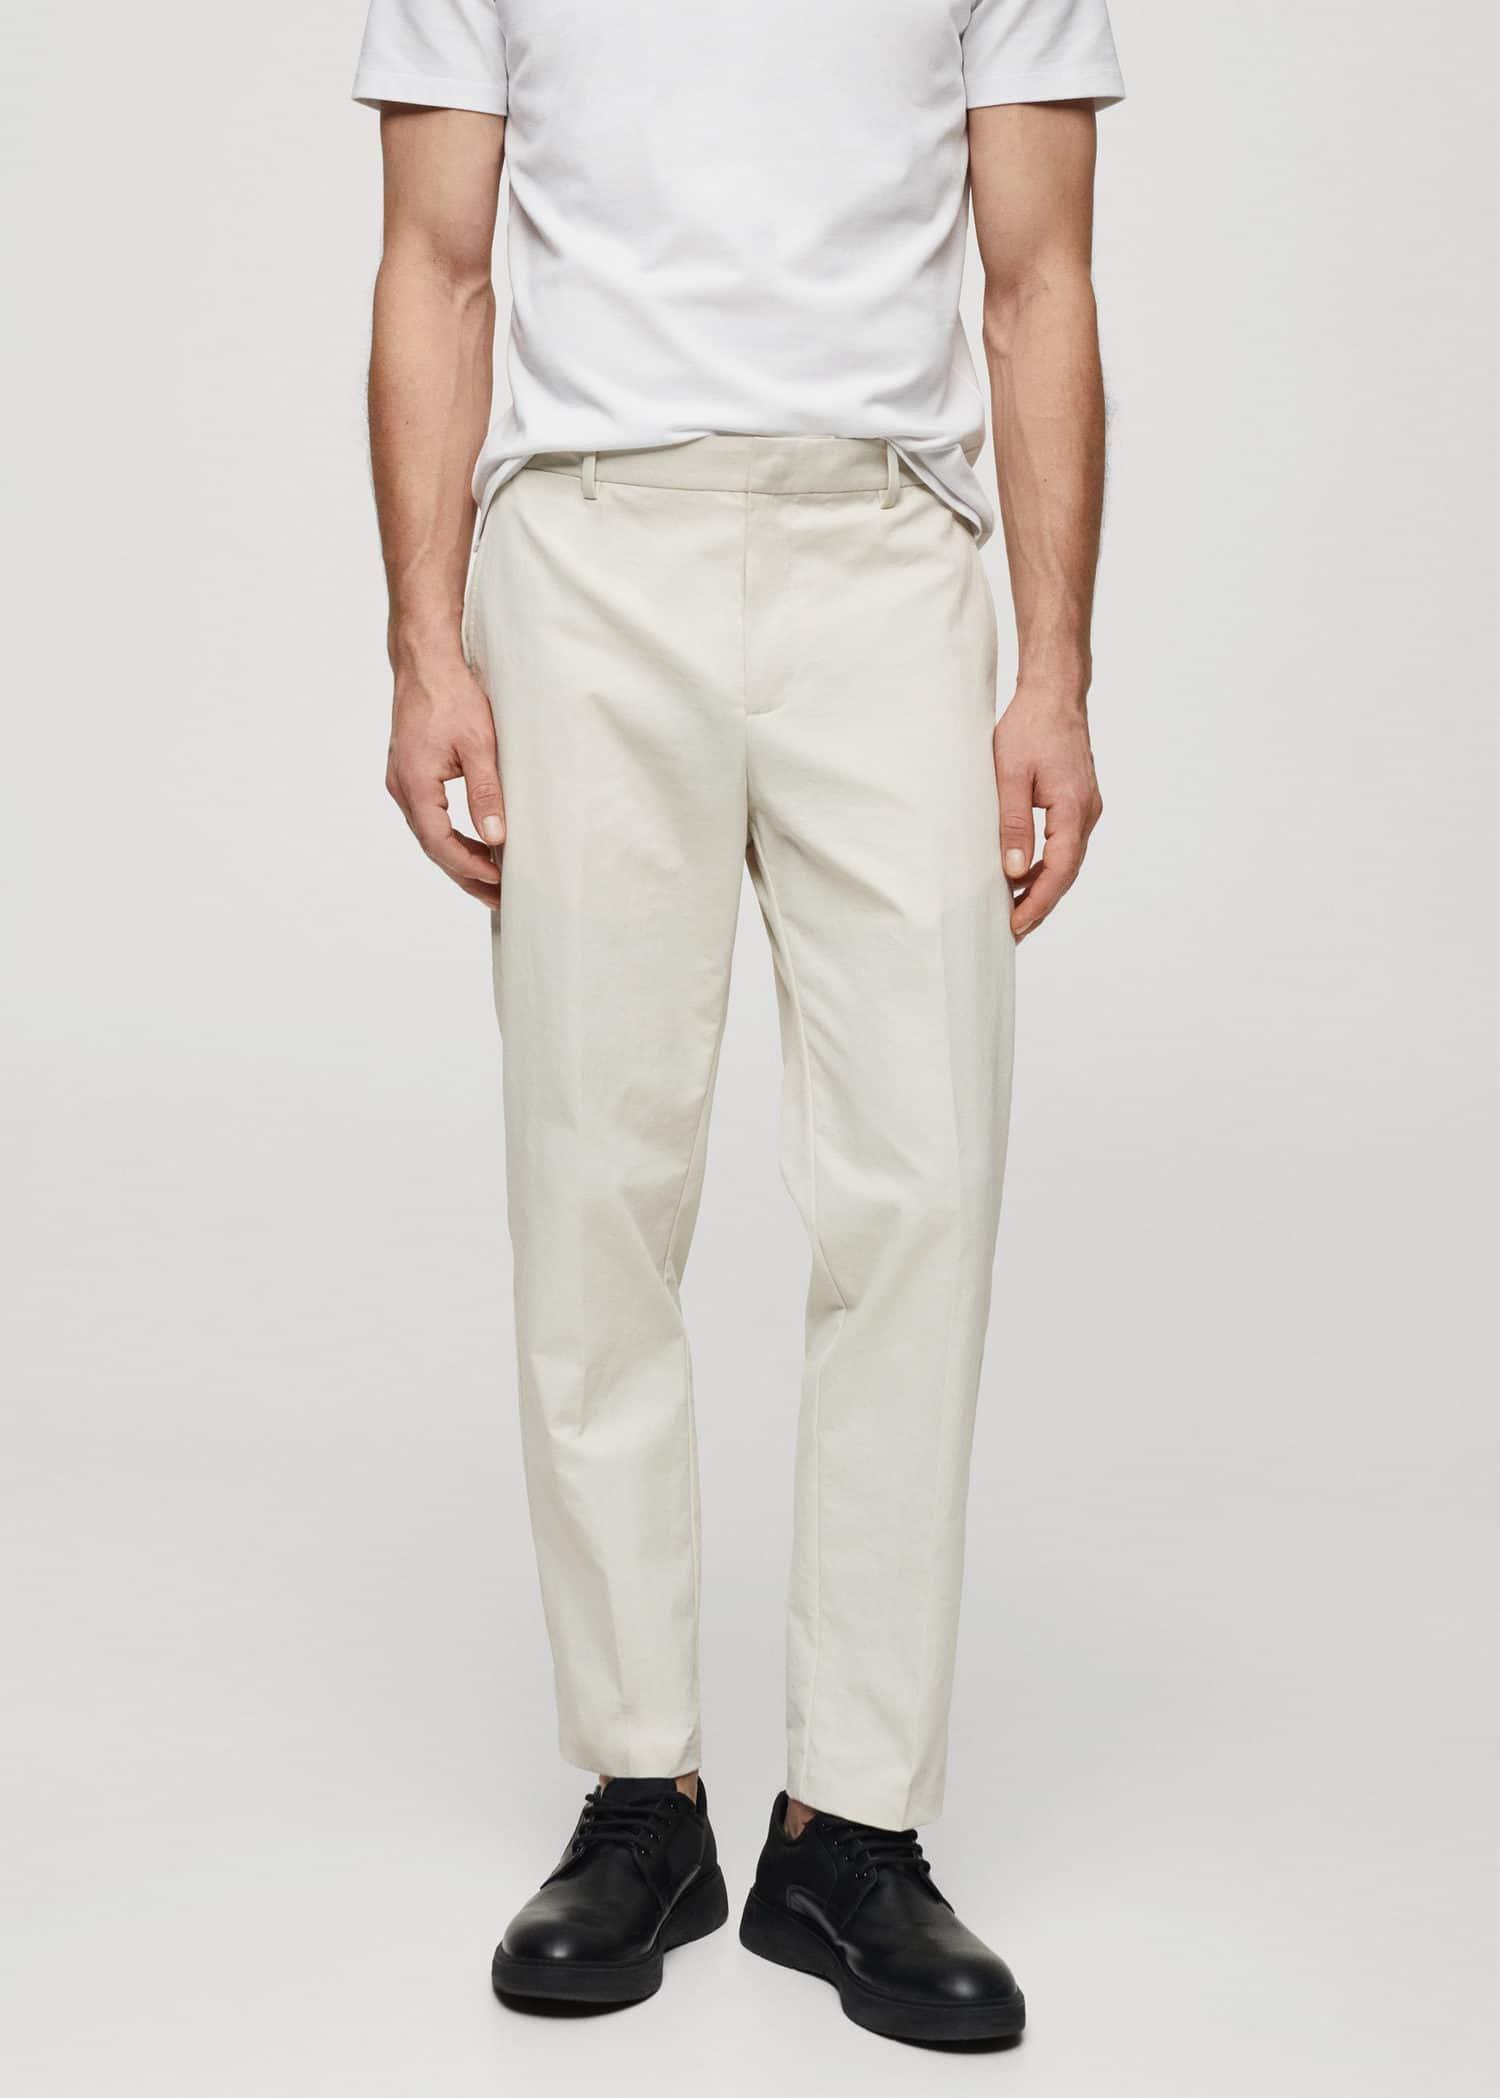 Mango - Grey Slim Fit Technical Fabric Trousers